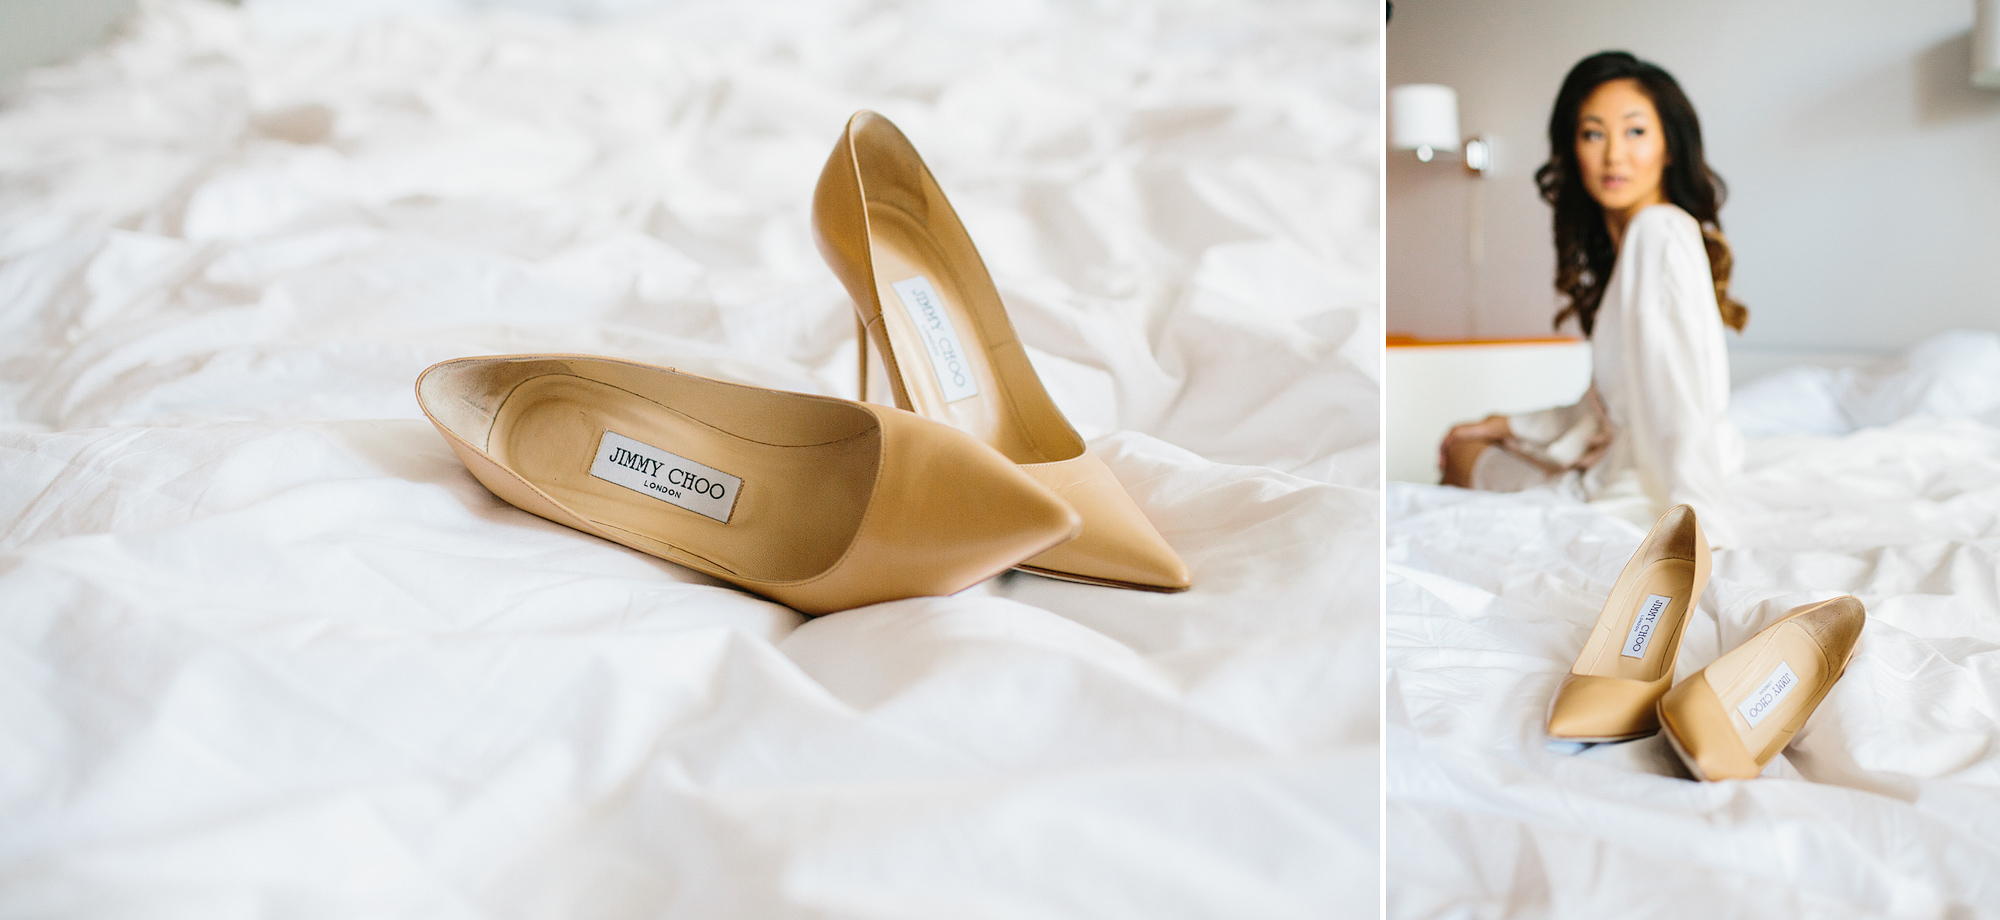 Annalisa wore tan Jimmy Choo heels for her wedding. 